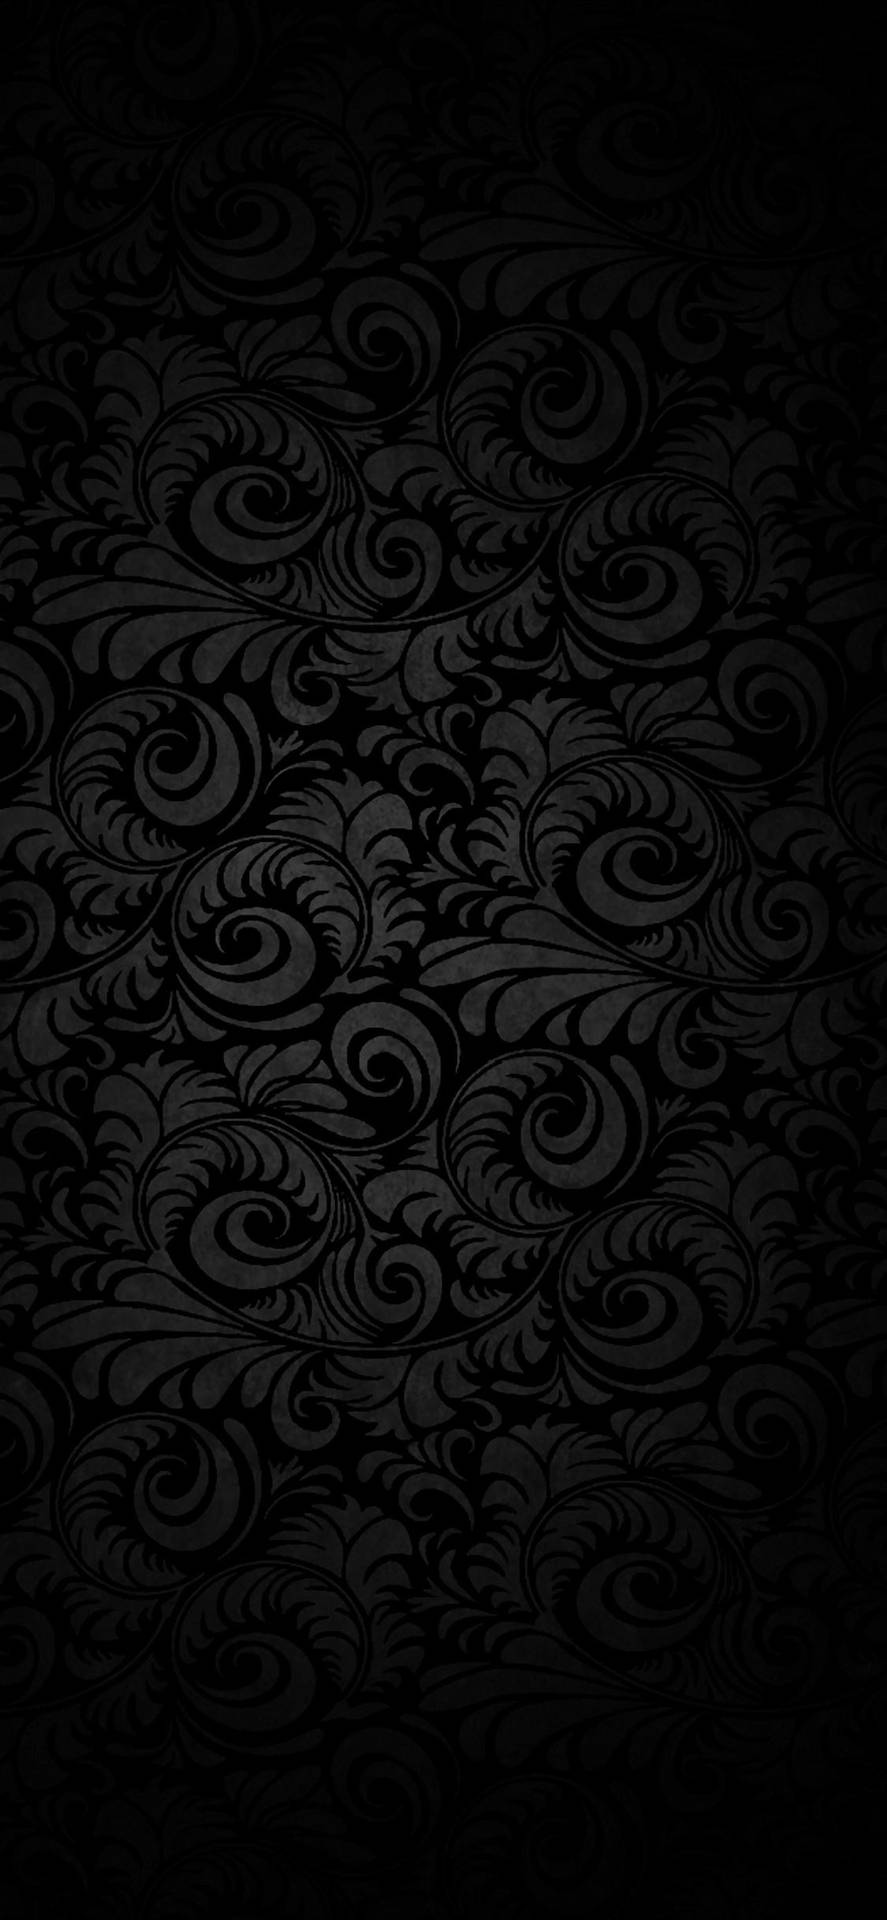 Curled Ferns Black Apple Iphone Background